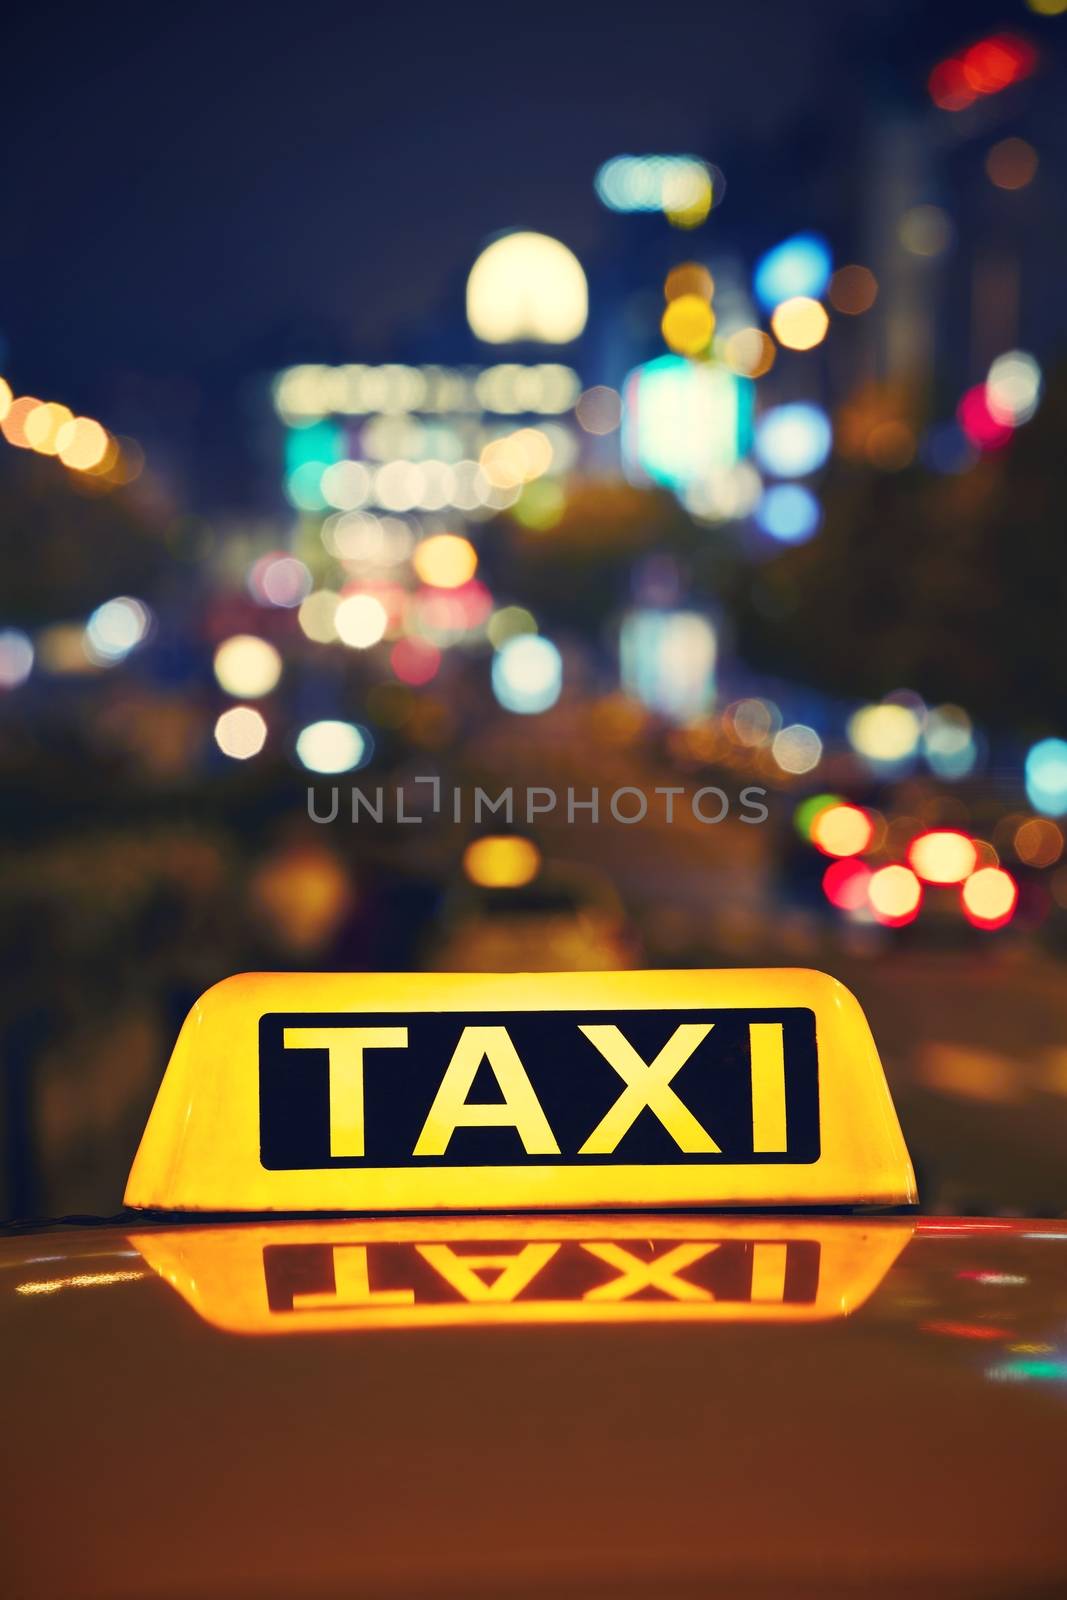 Taxi car on the street at night - Wenceslas Square, Prague